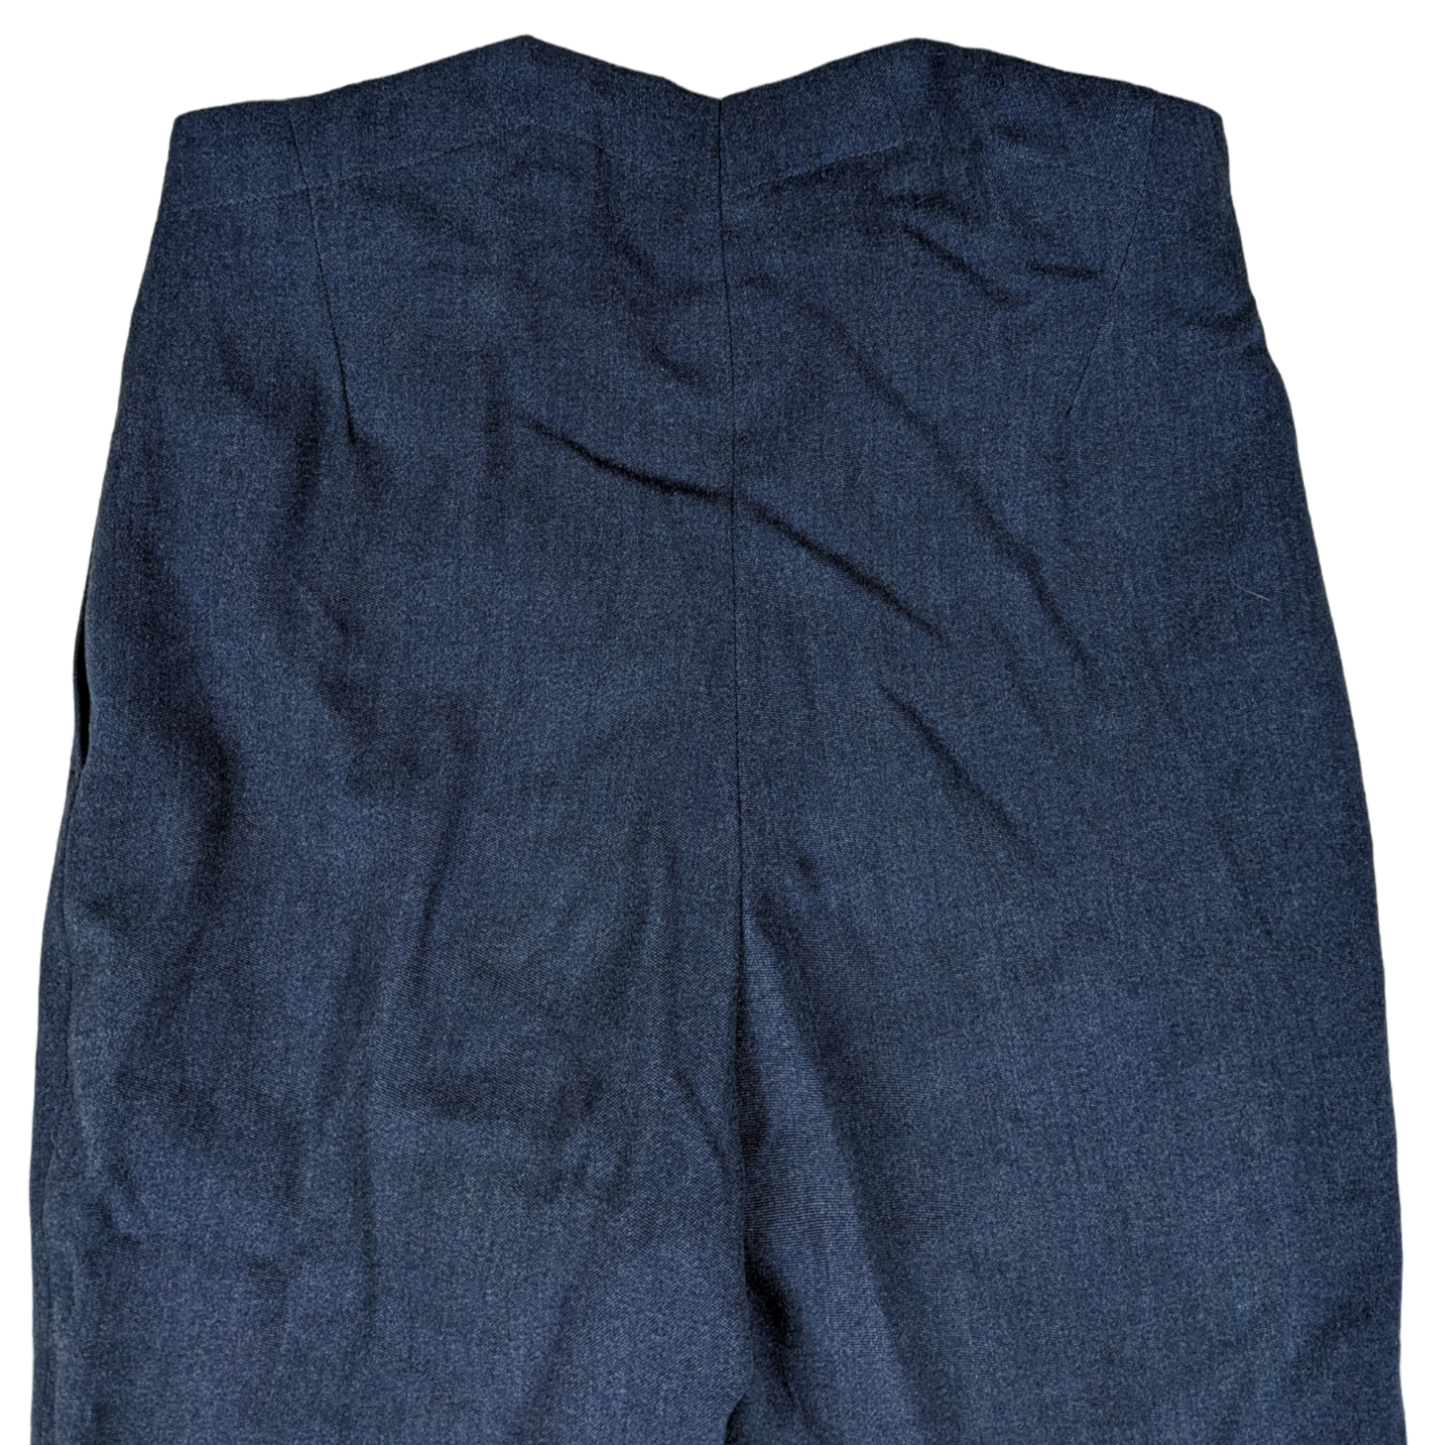 British Royal Air Force RAF No. 5 Mess Dress Trousers - 1970s